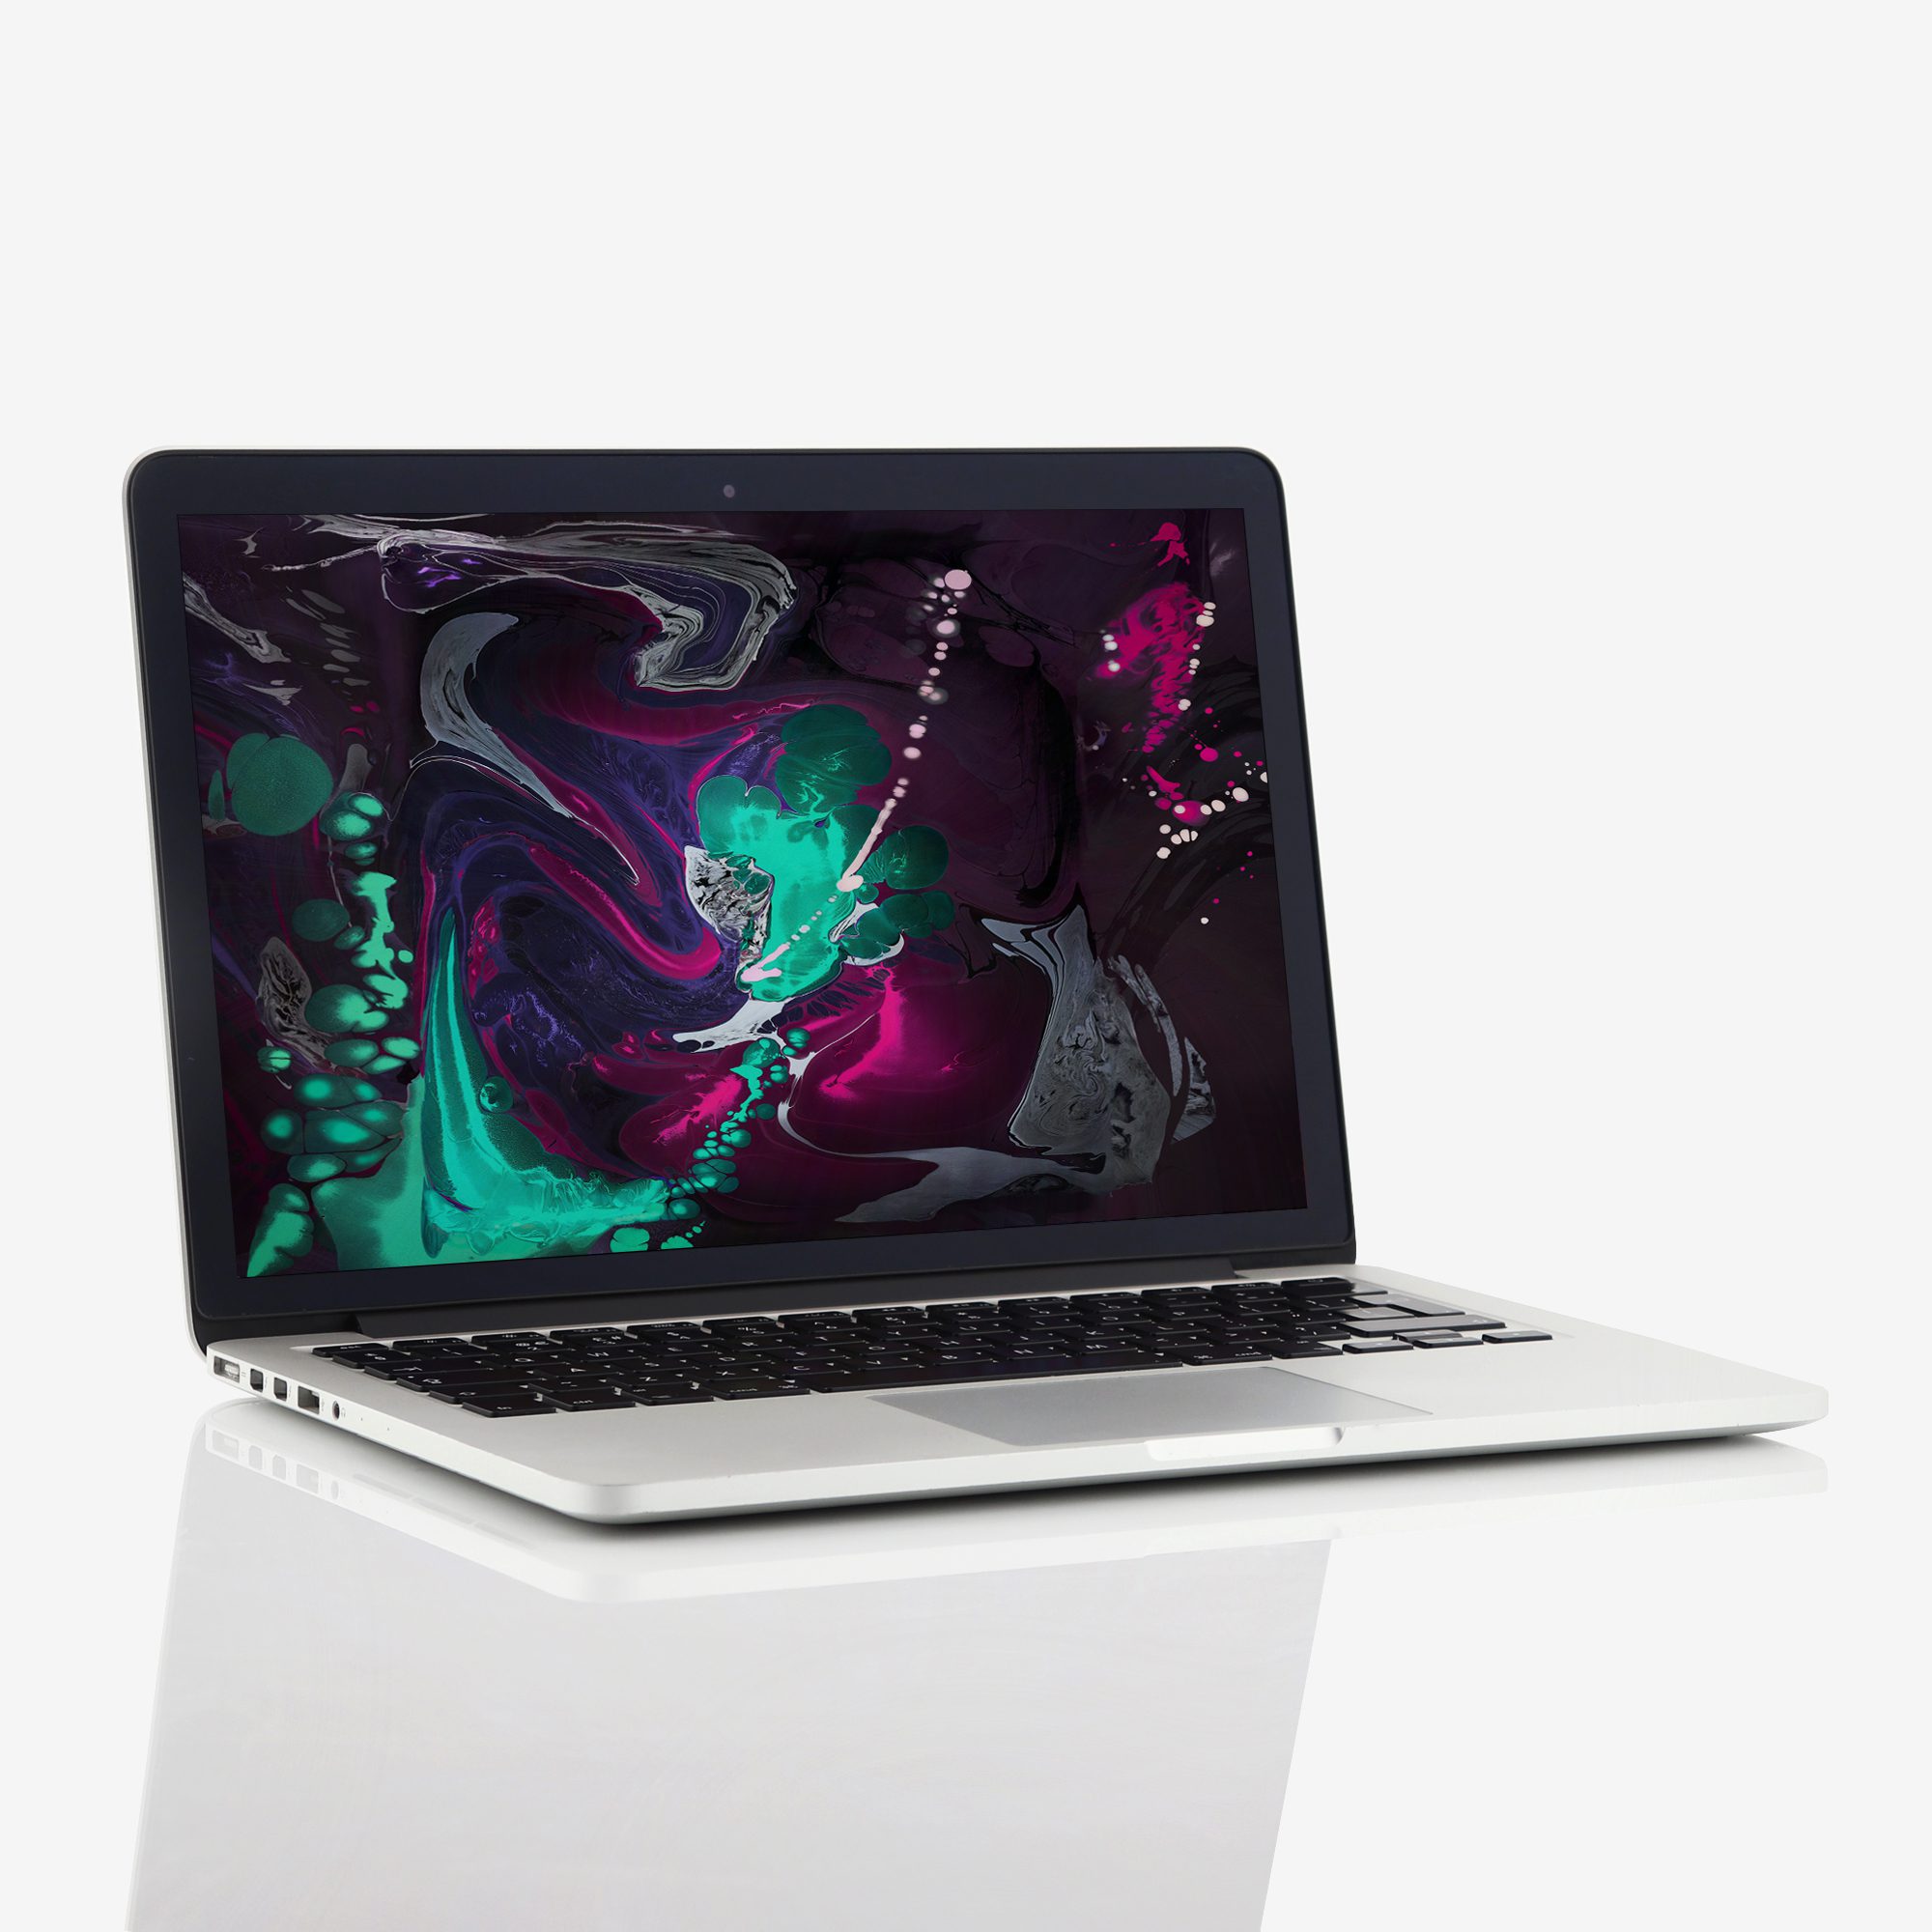 1 x Apple MacBook Pro Retina 13 Inch Intel Core i5 2.60 GHz (2013)